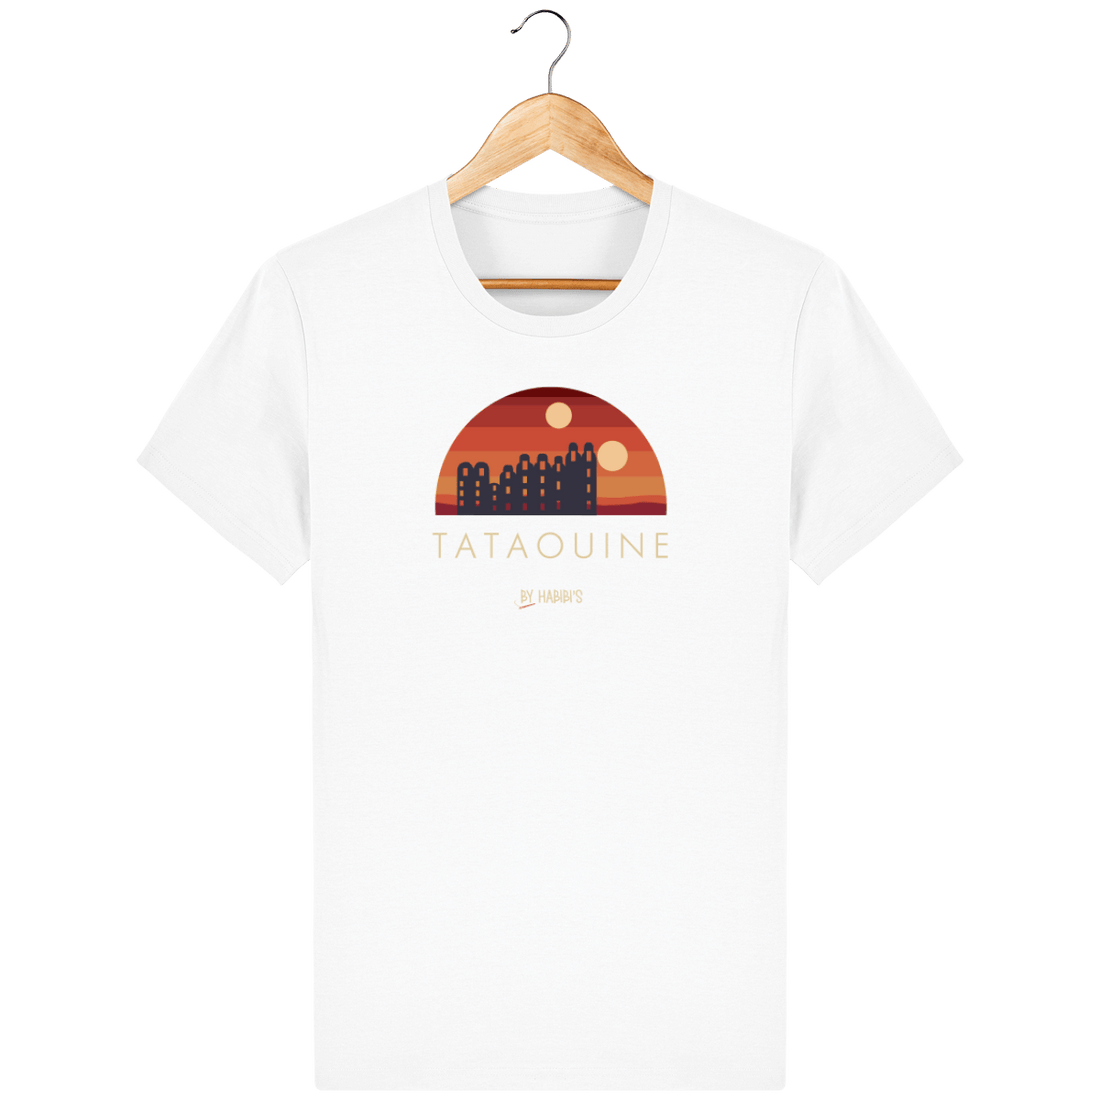 Unisexe>Tee-shirts - T-Shirt Femme TATAOUINE